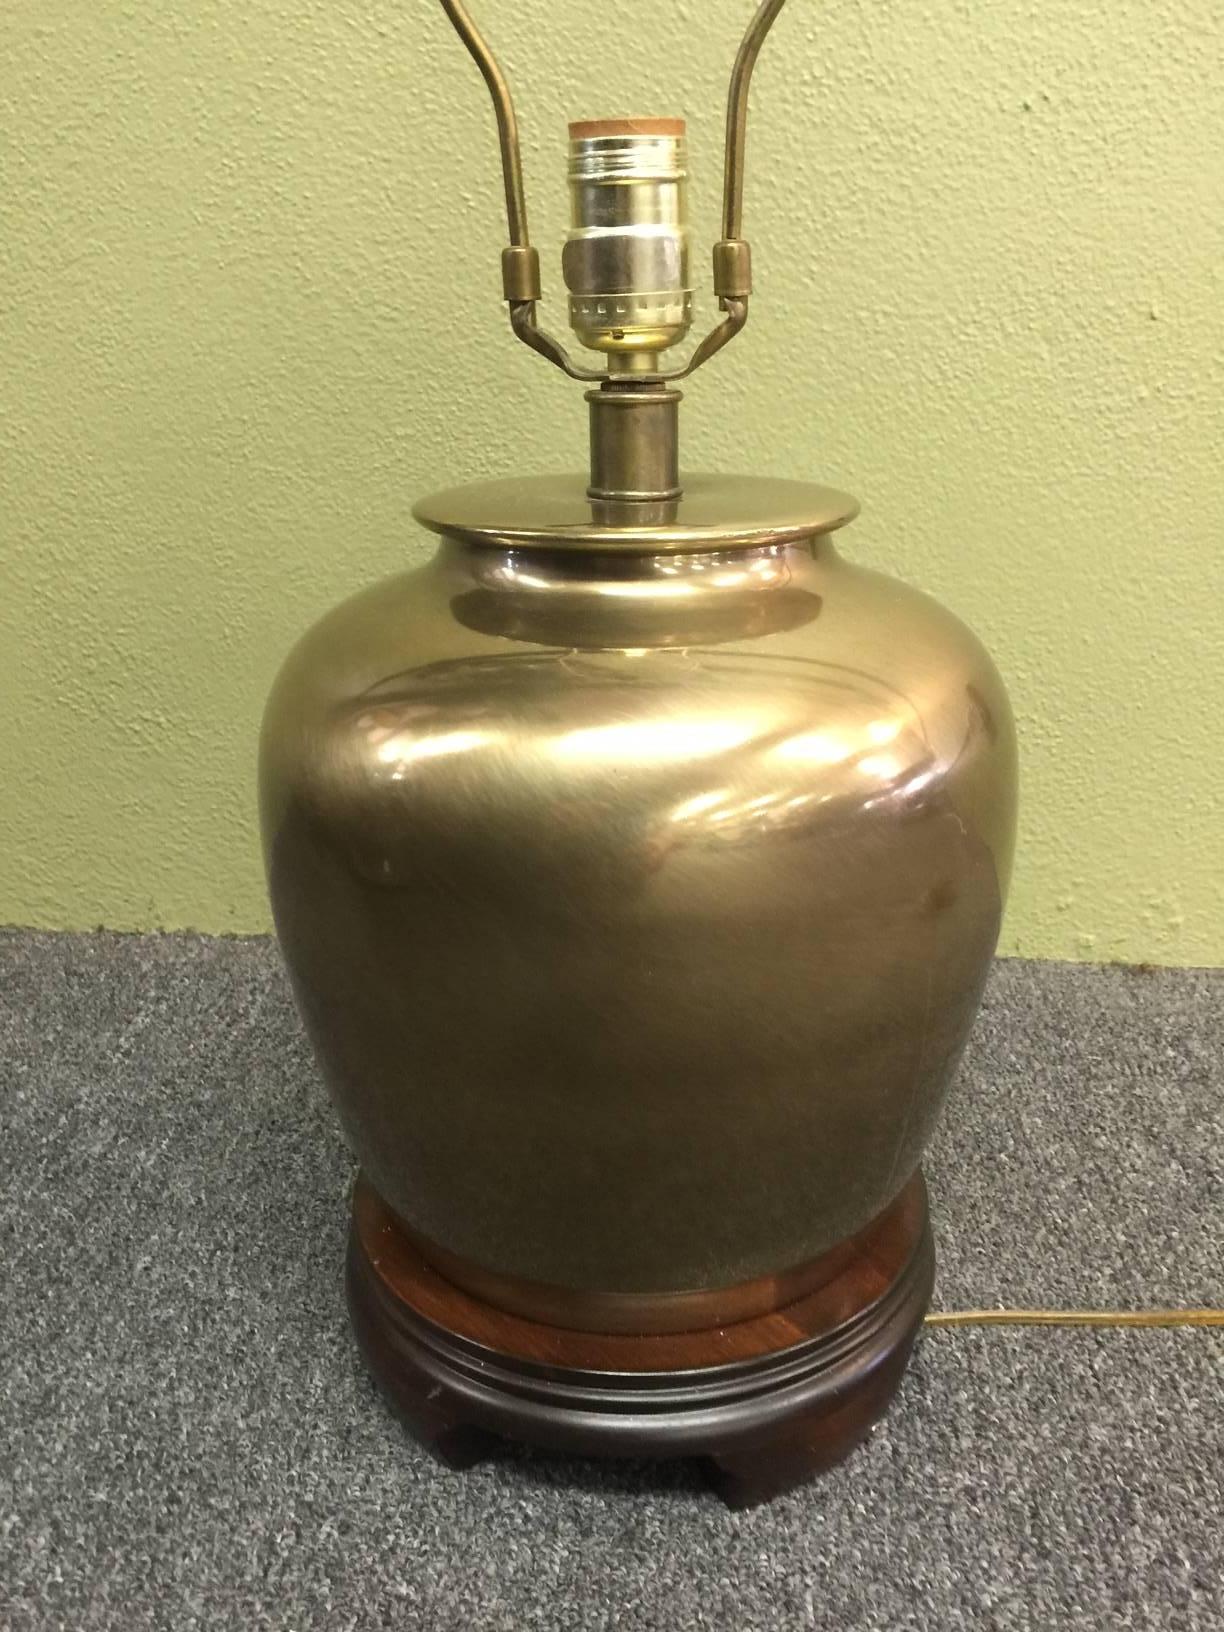 brass ginger jar lamps